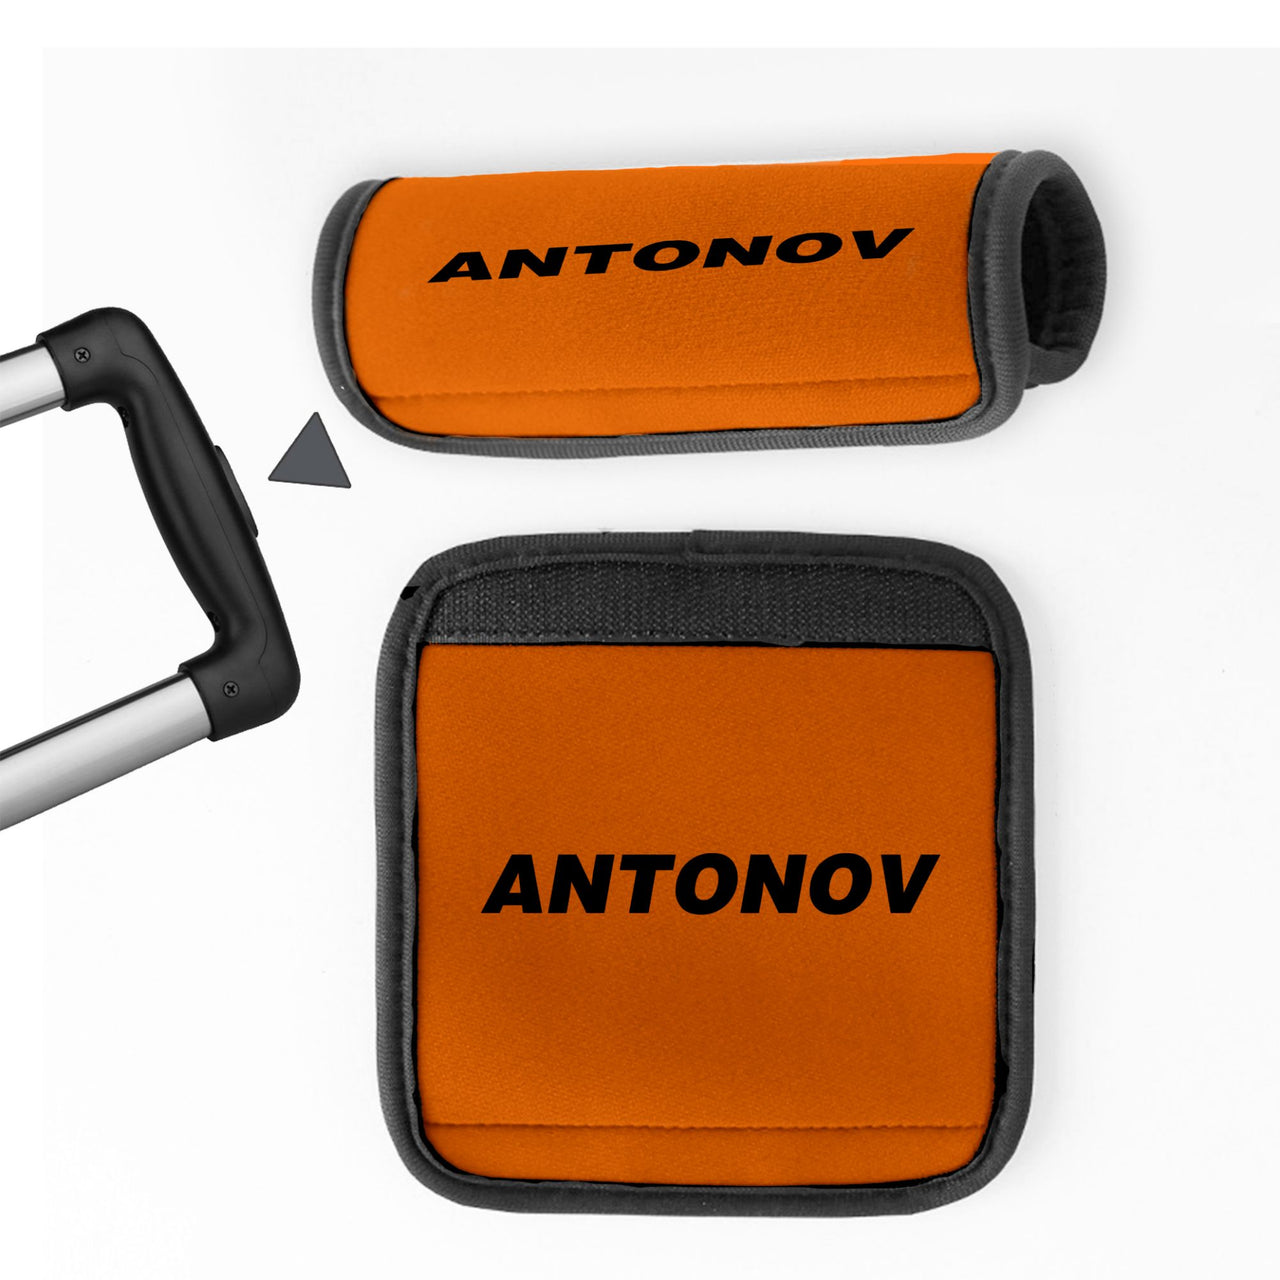 Antonov & Text Designed Neoprene Luggage Handle Covers